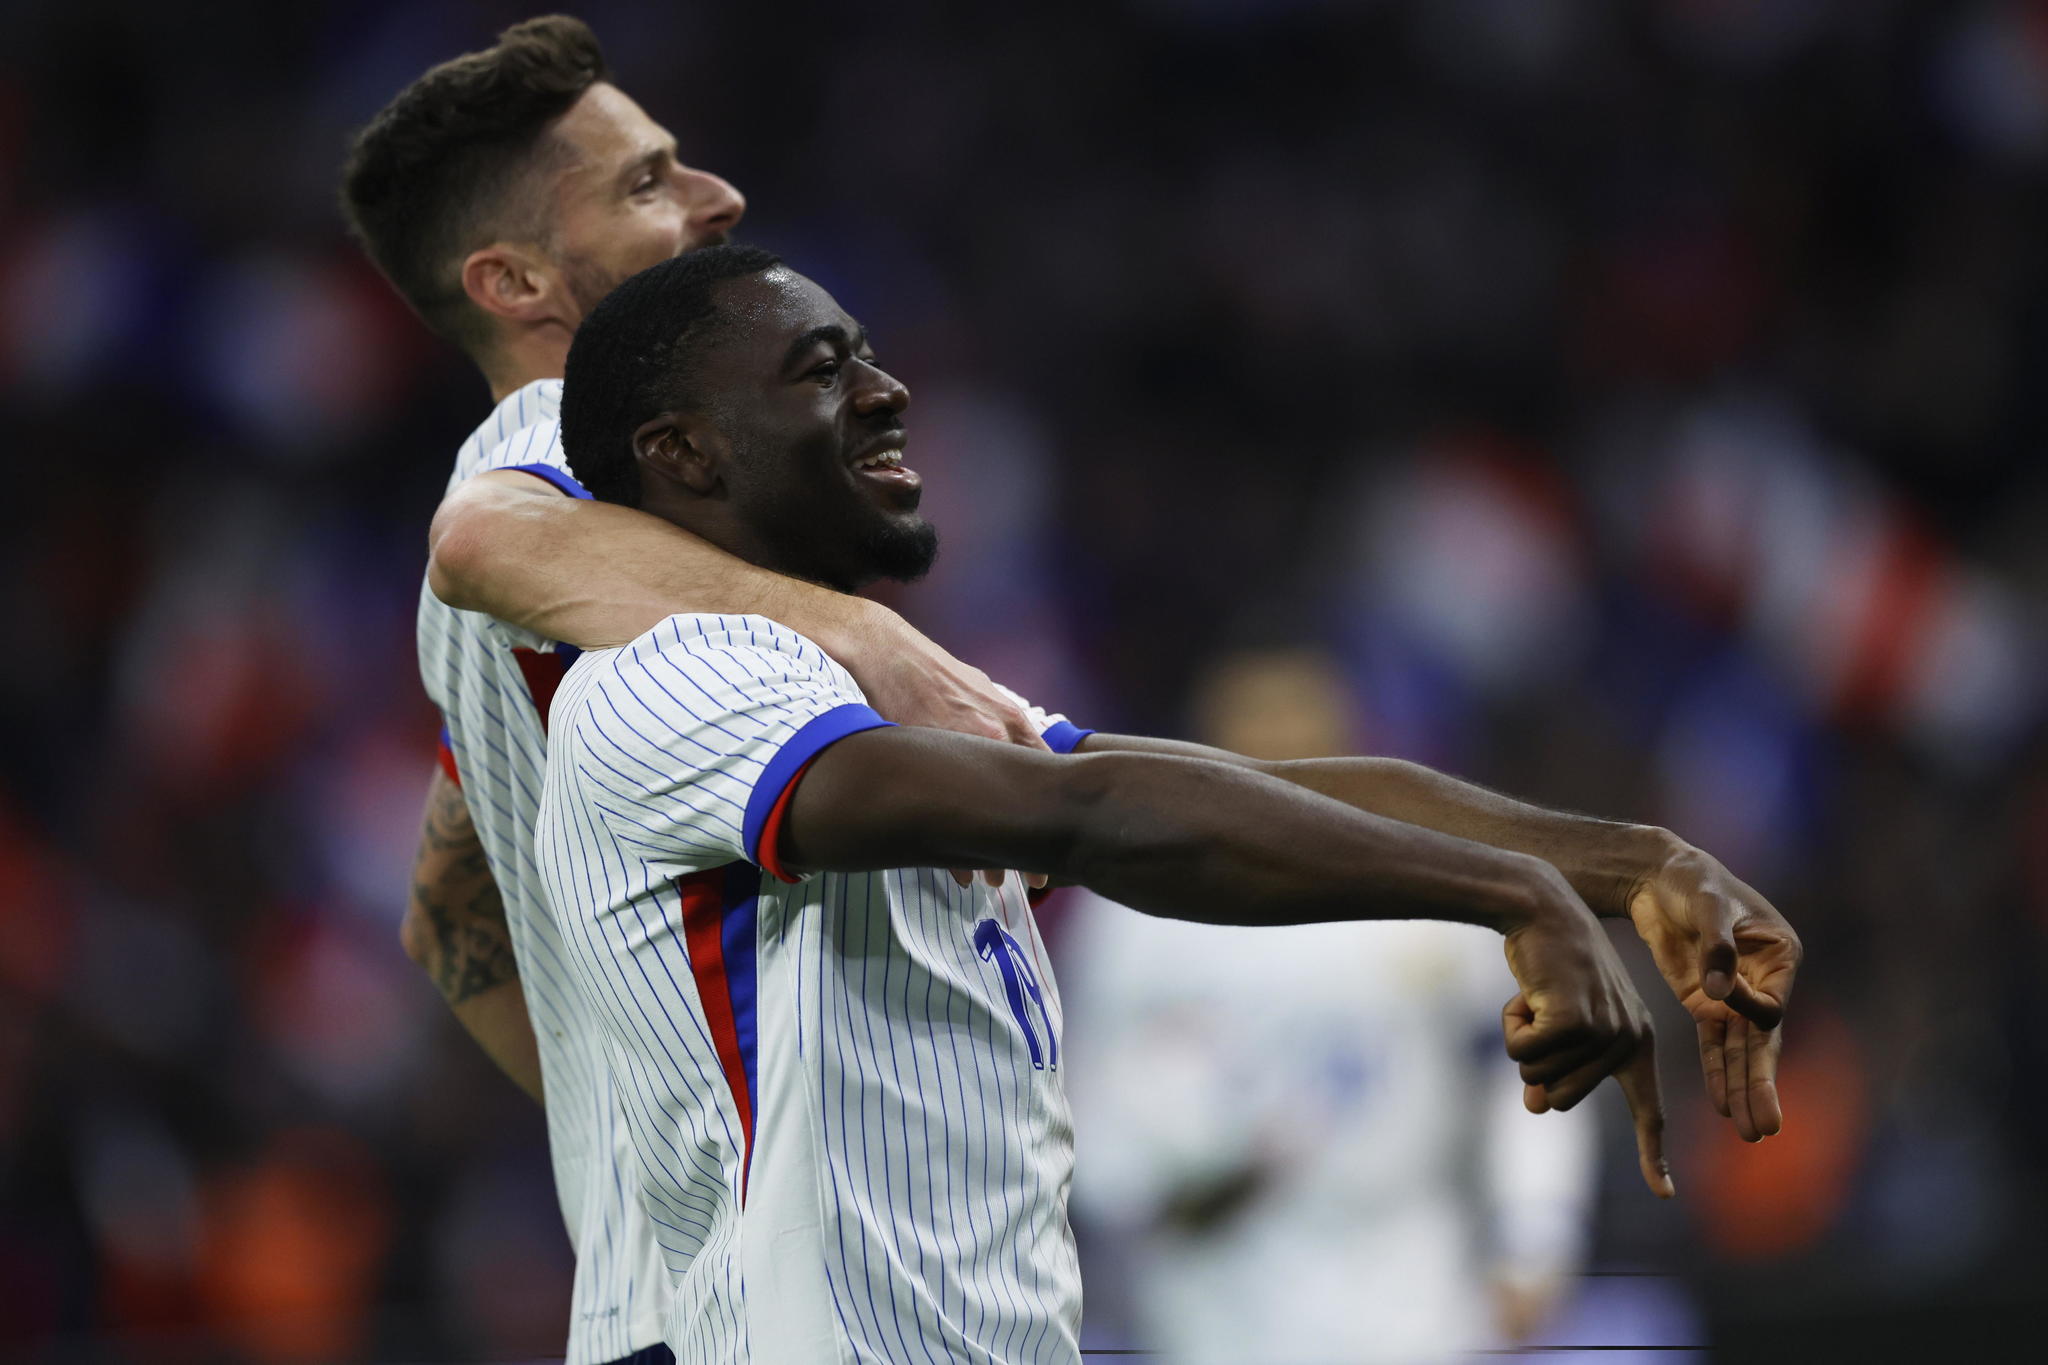 France players celebrate